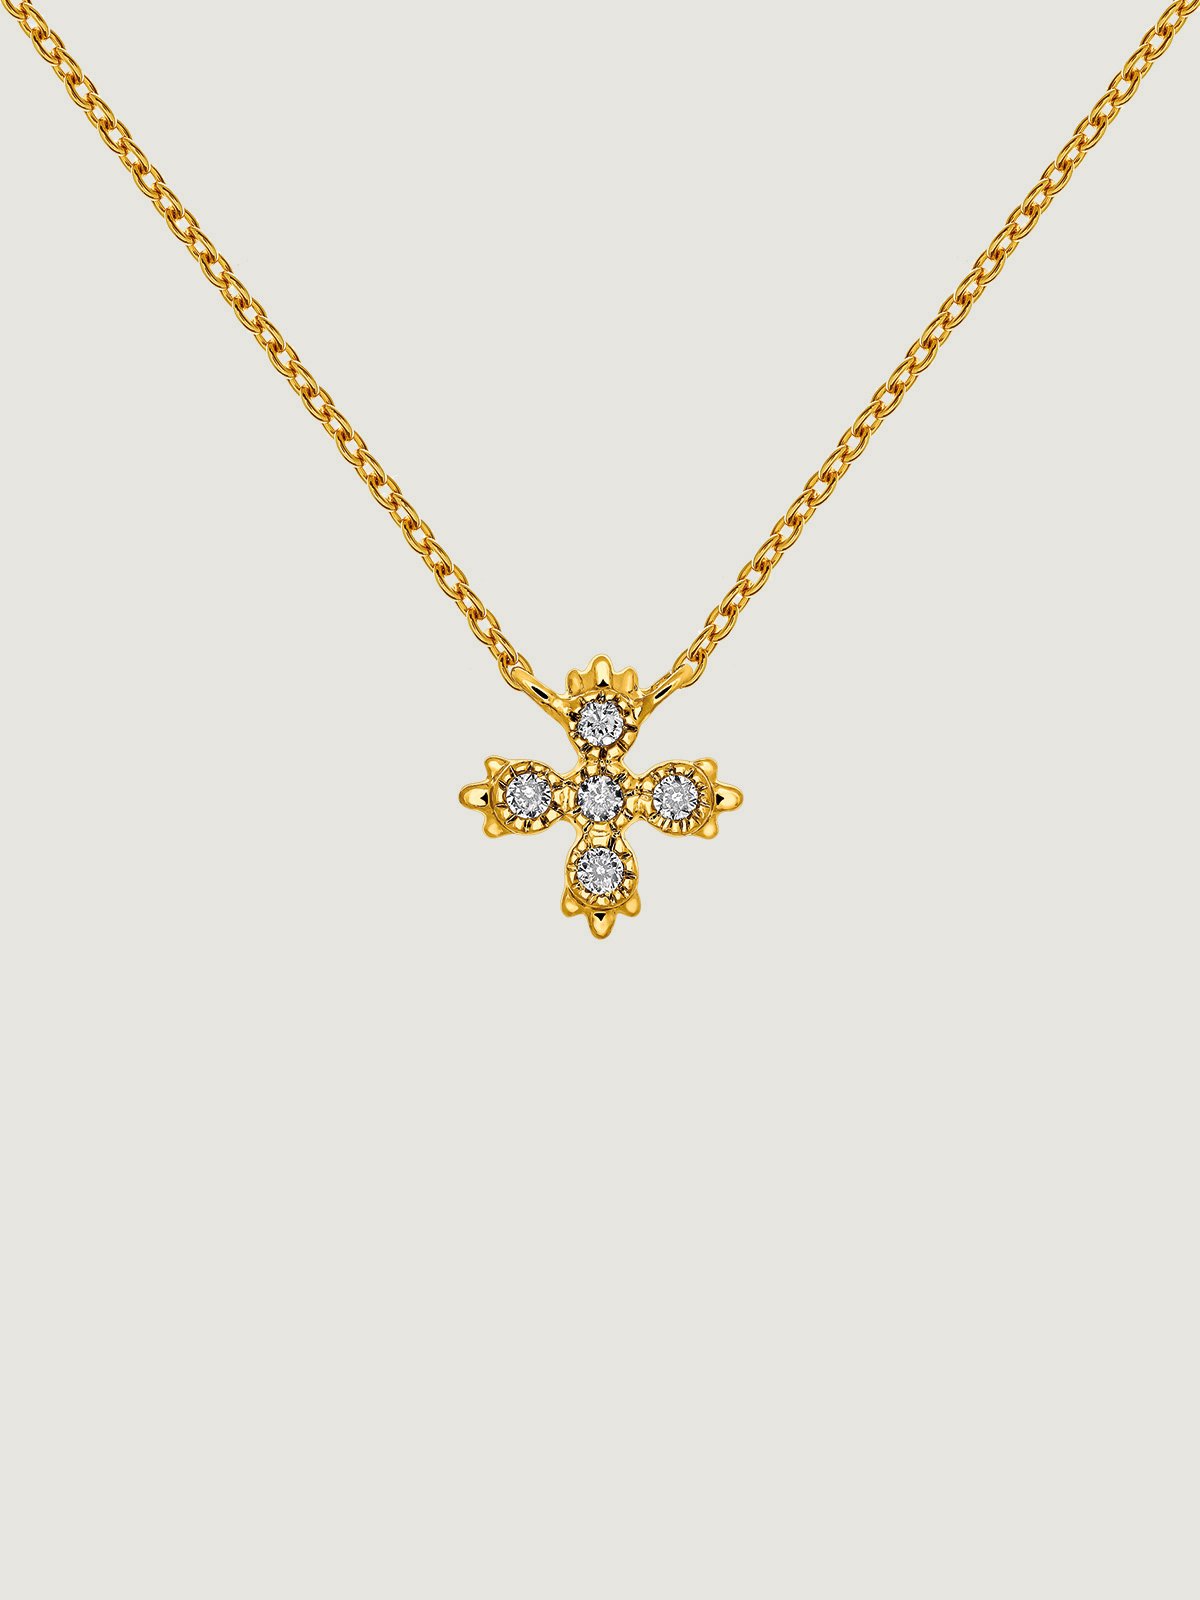 Pendentif en or jaune 9K avec croix de diamants